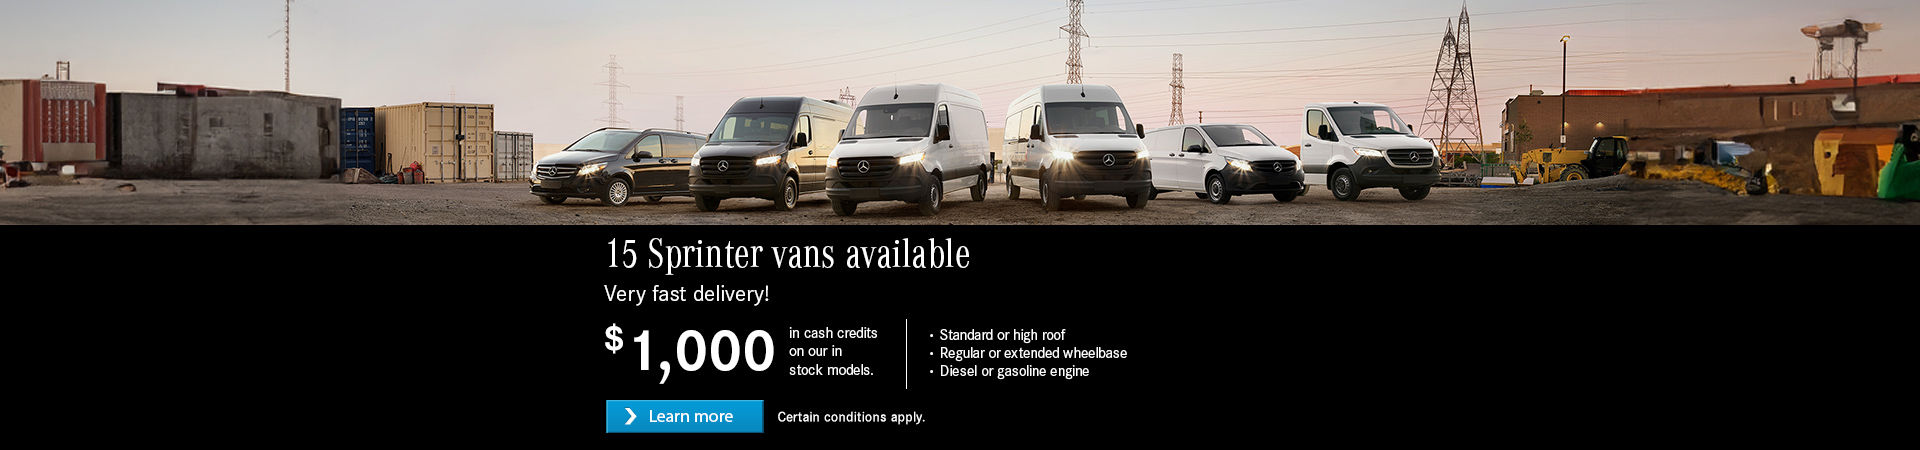 15 Sprinter Vans Available